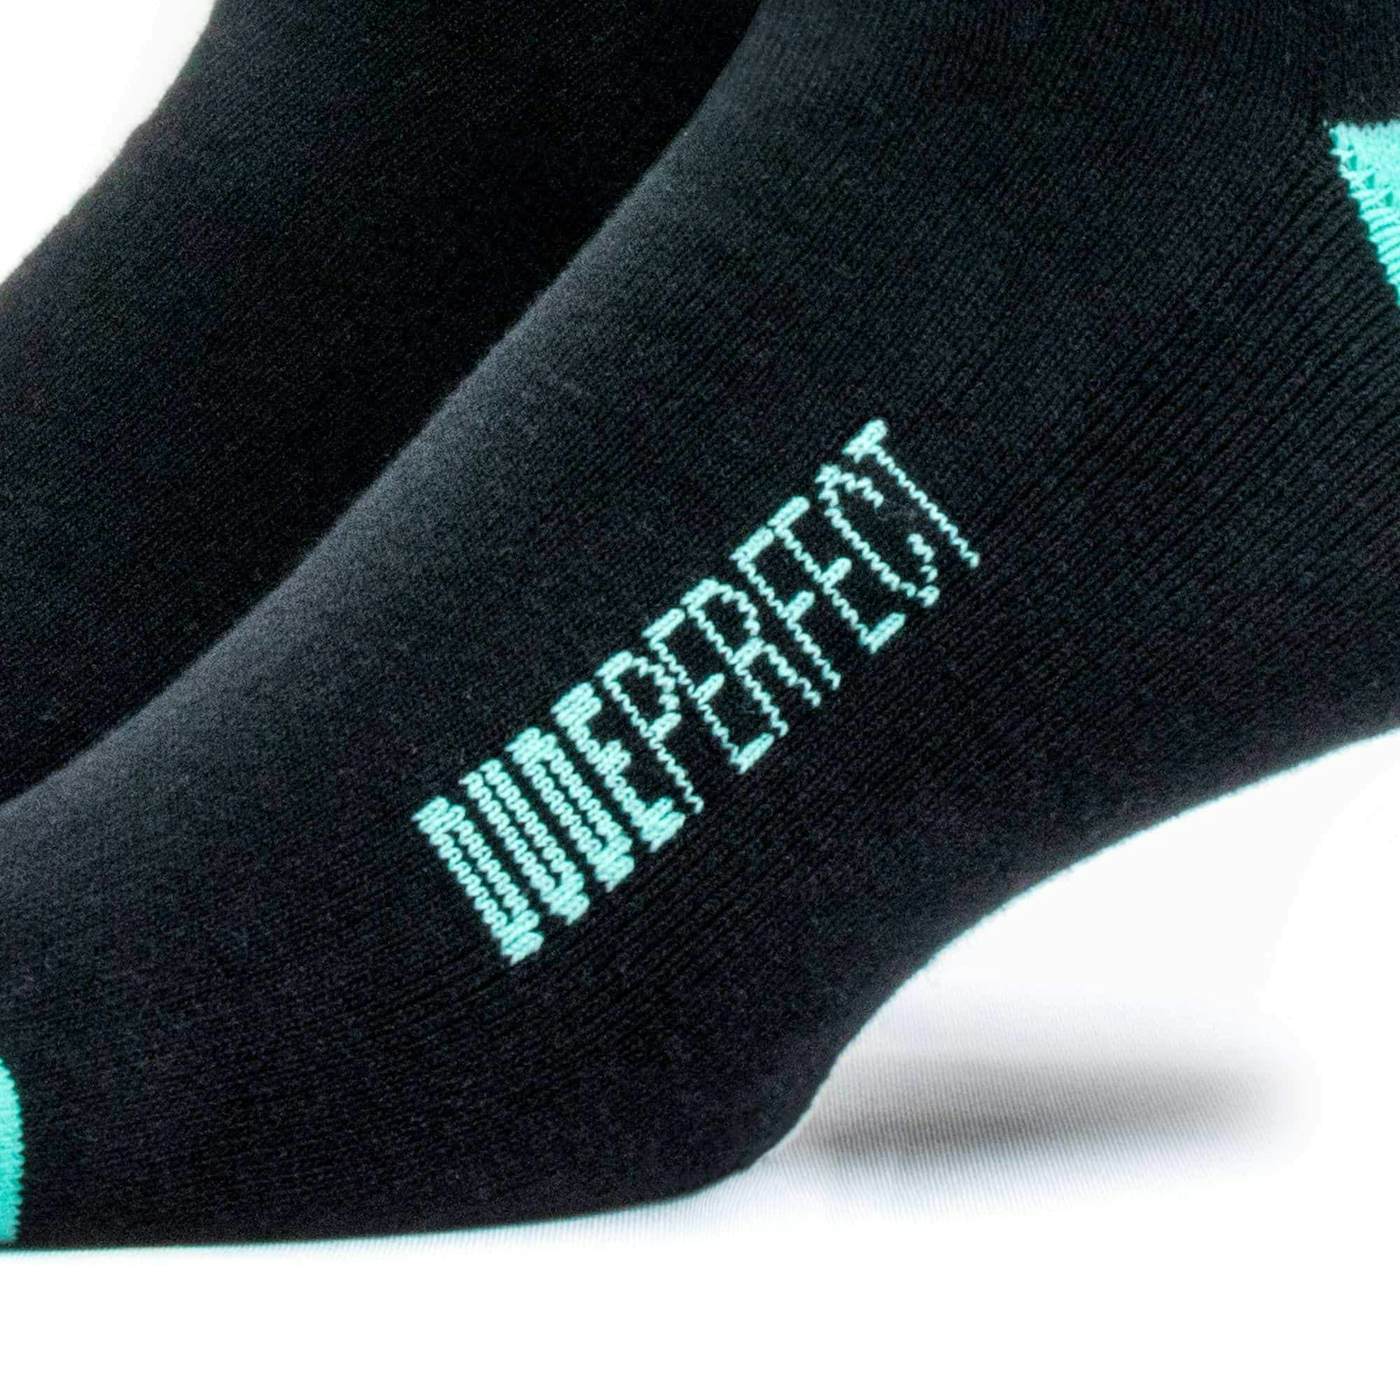 Dude Perfect Black // Green Socks